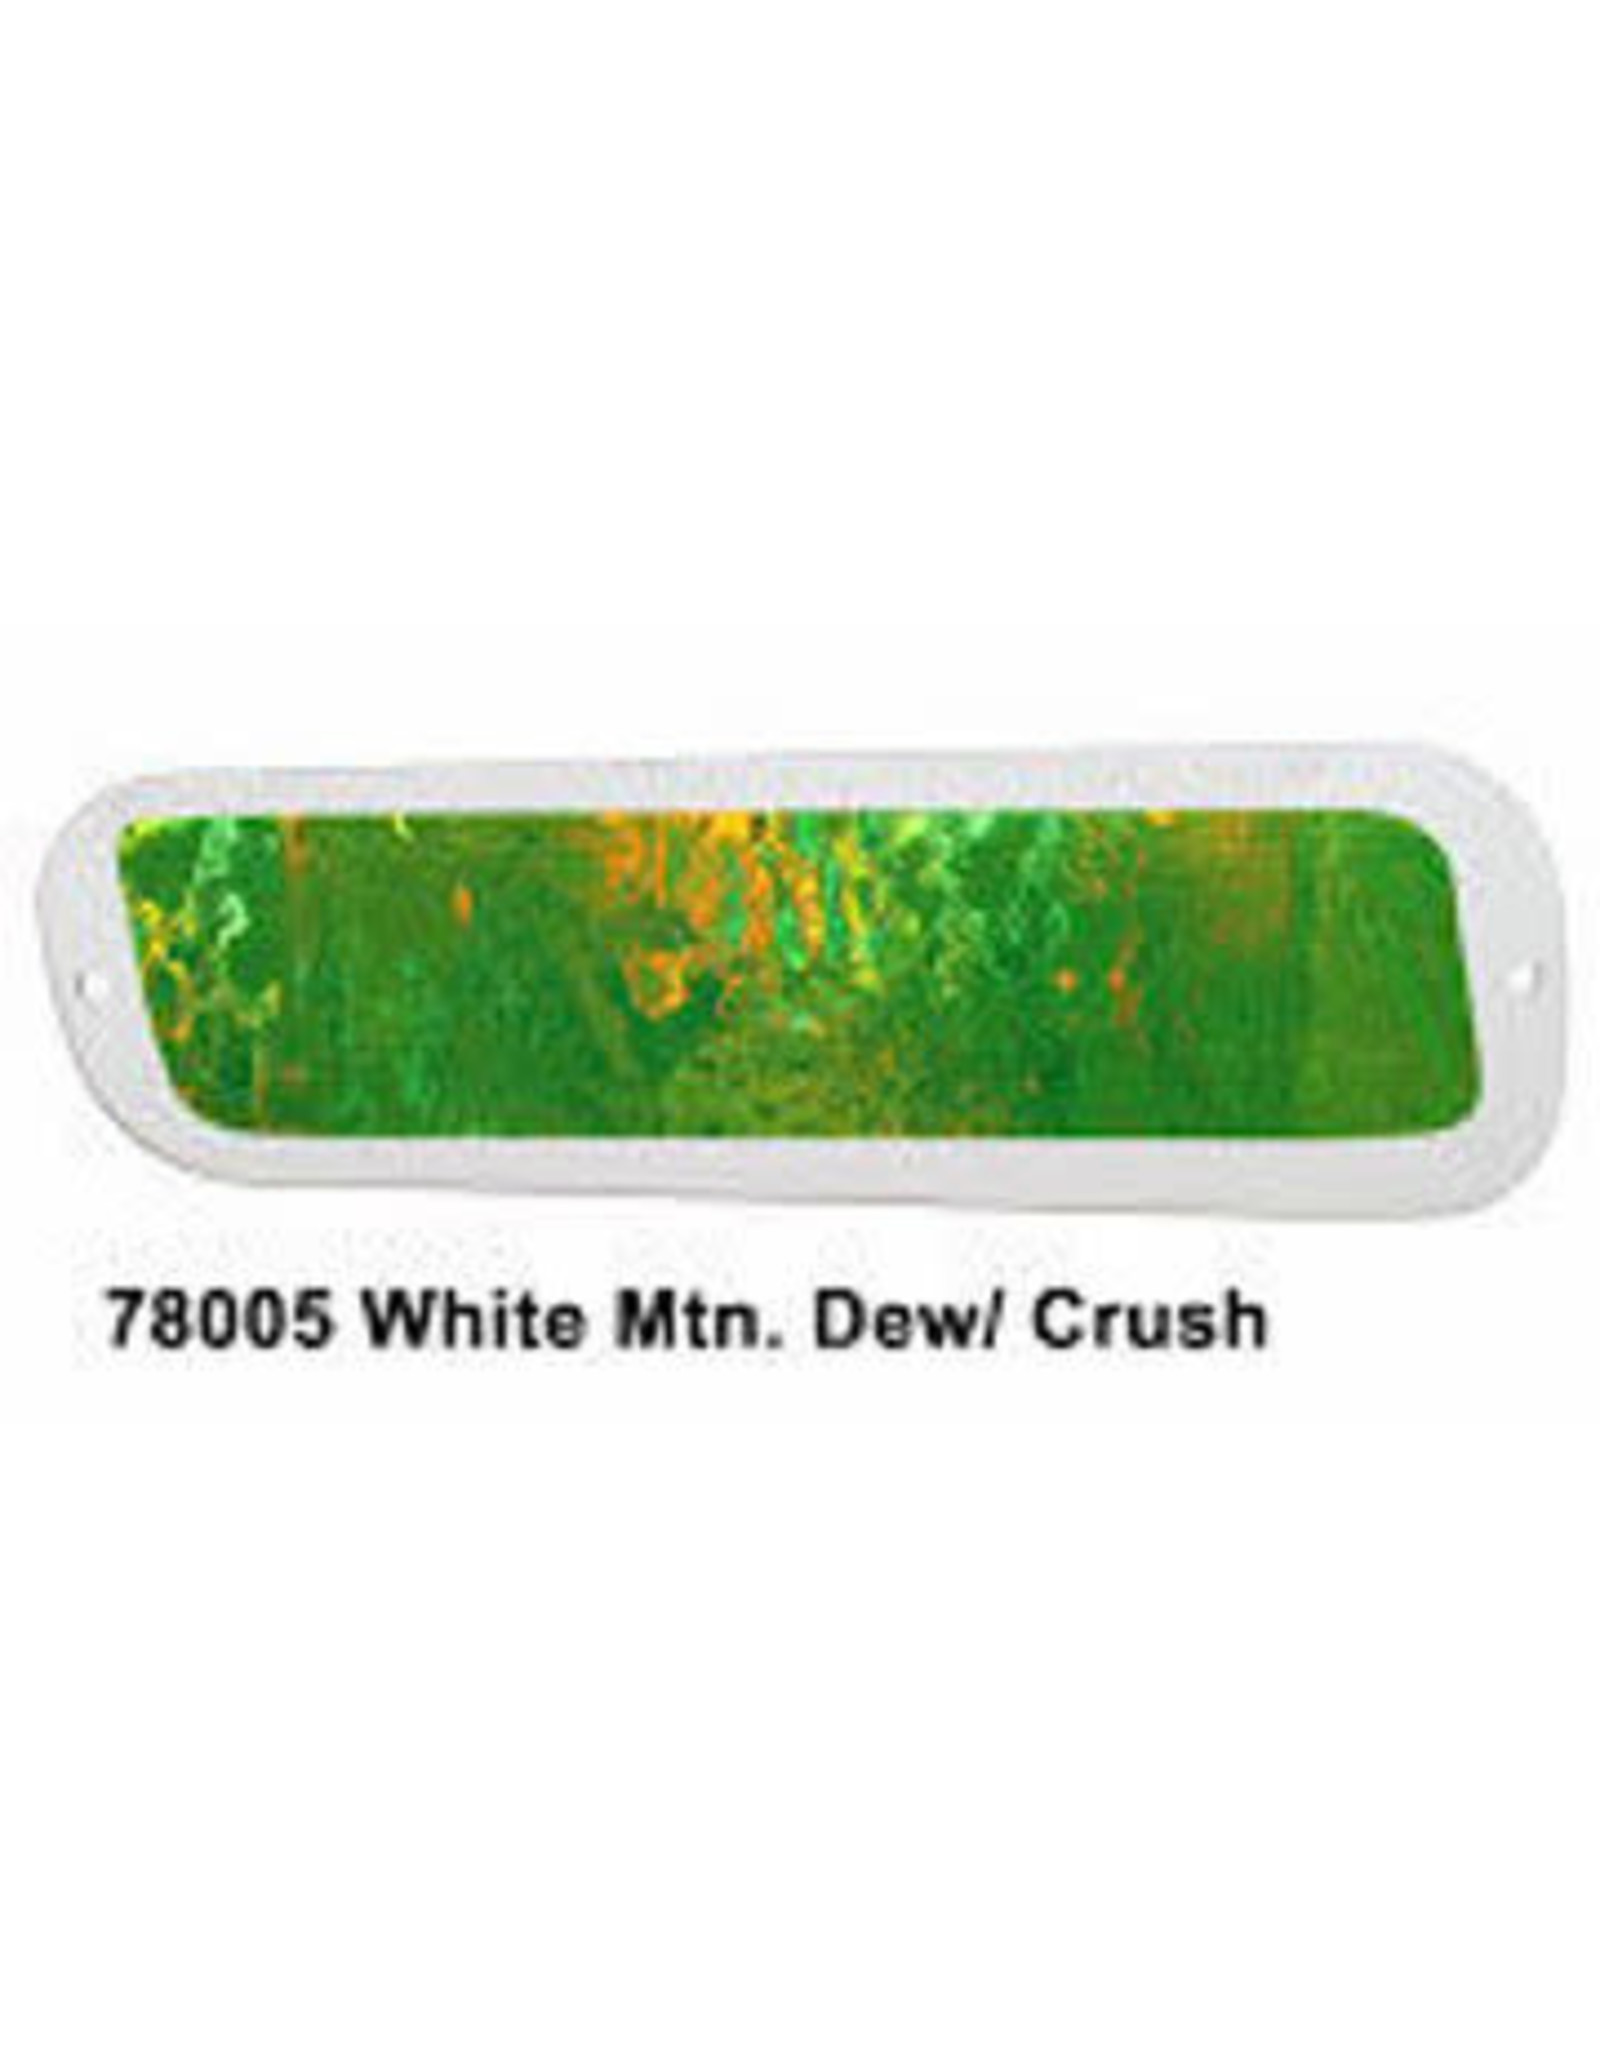 dream weaver DREAMWEAVER PADDLE 8 - WHITE-MOUNTAIN DEW/CRUSH GLOW